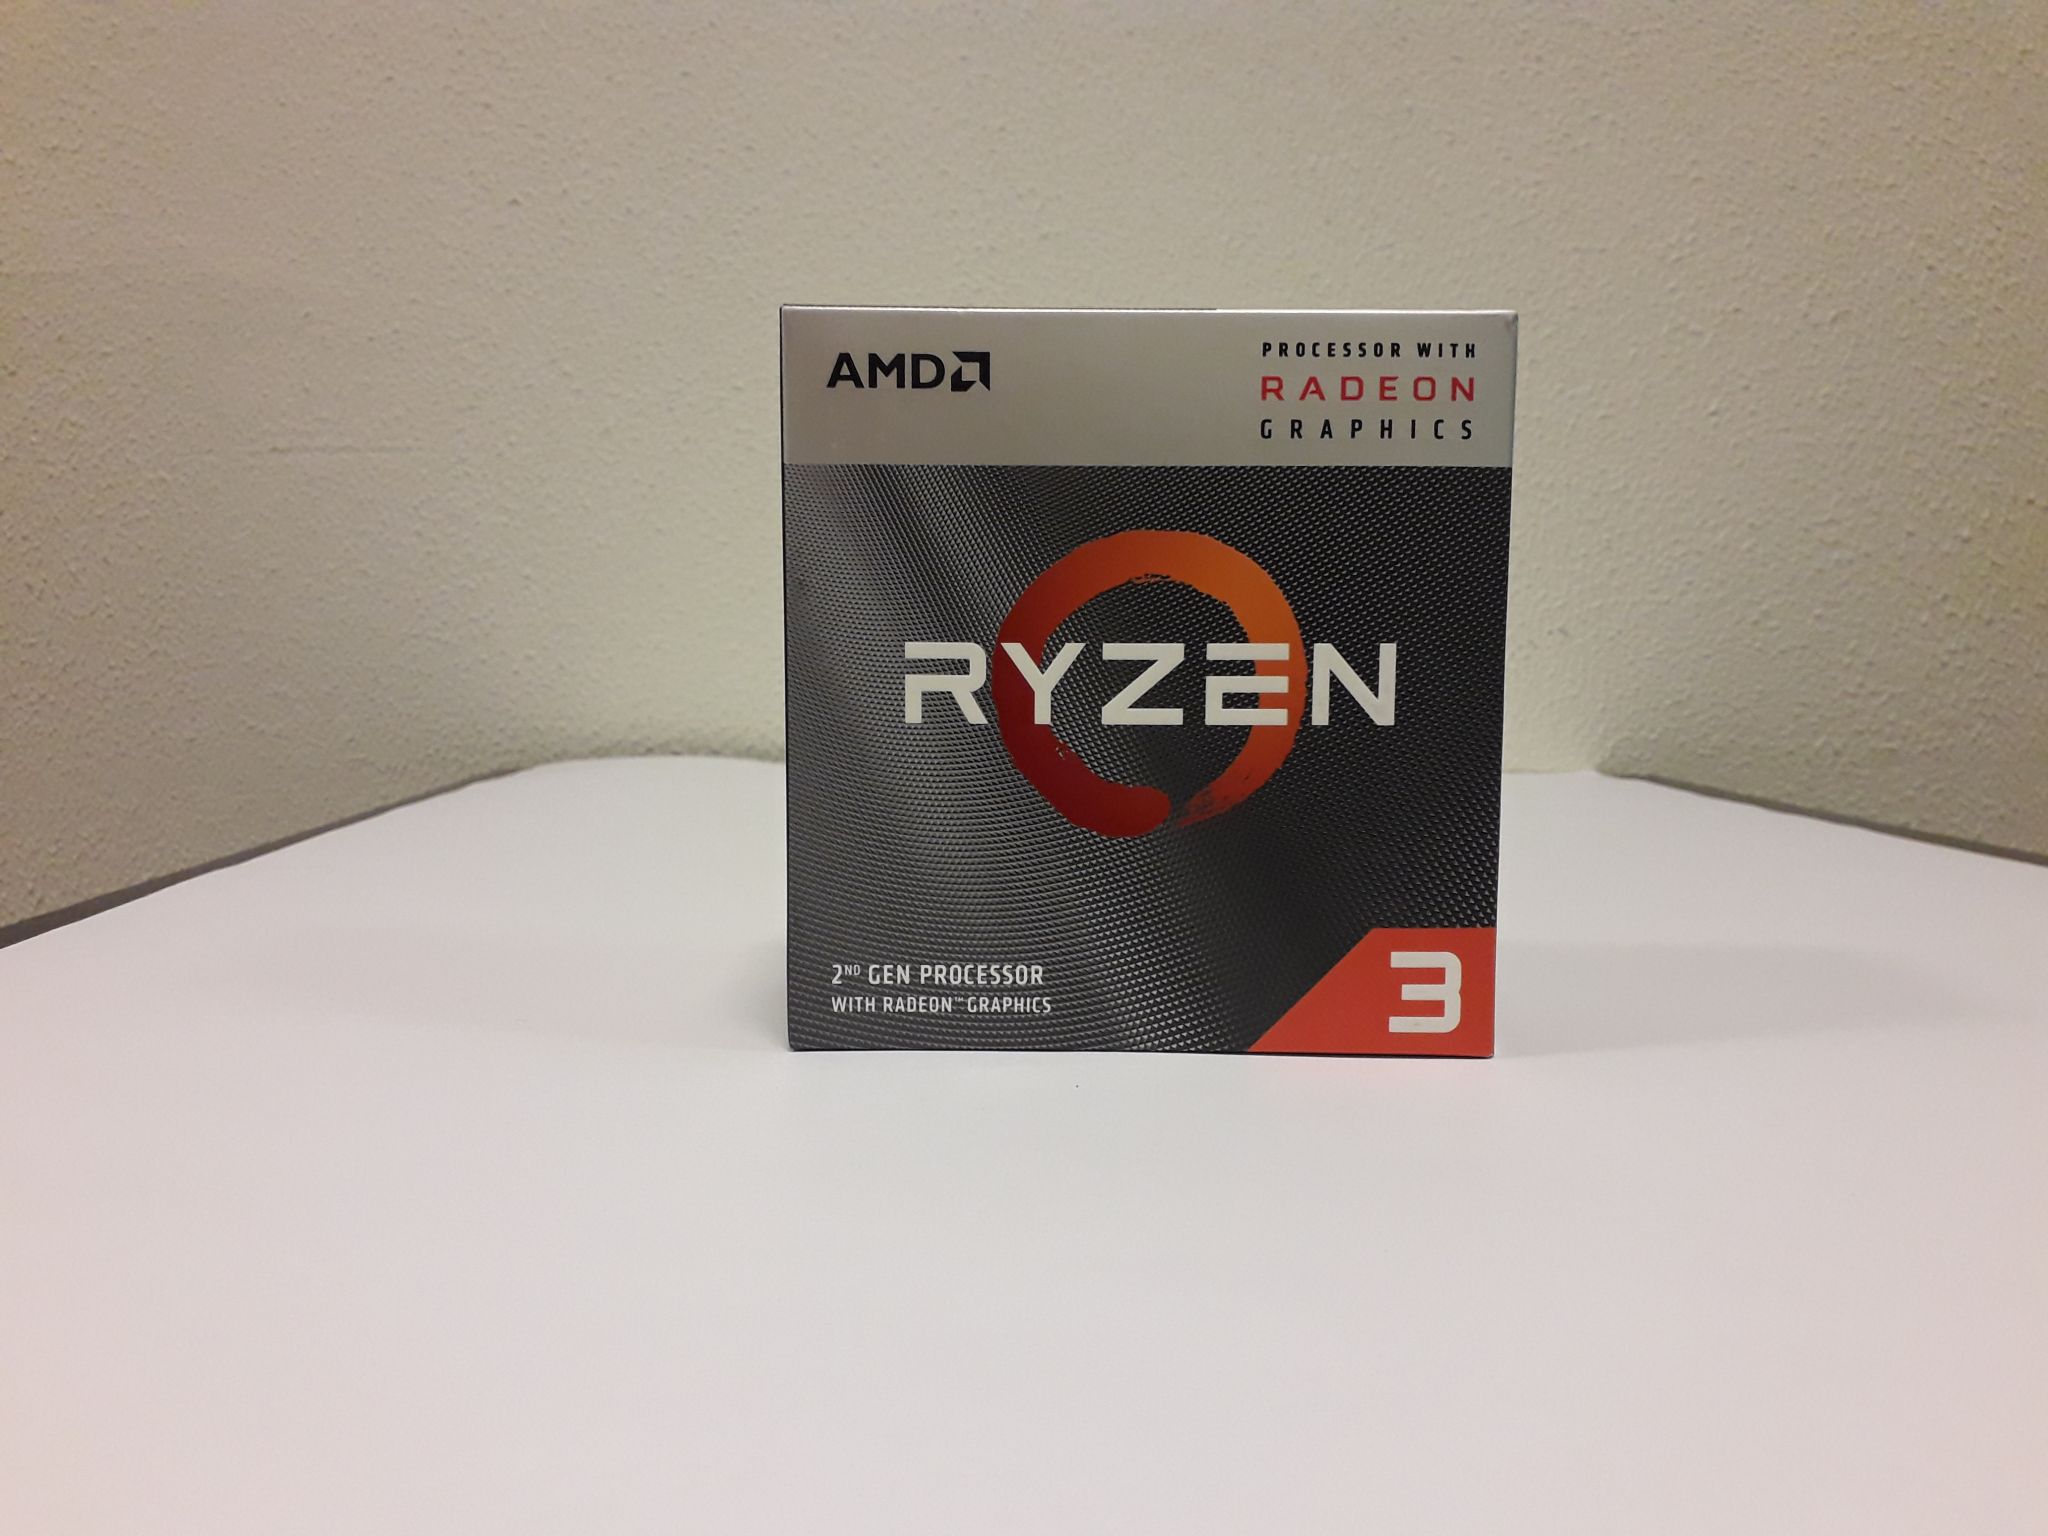 3 pro 3200g. Процессор AMD Ryzen 3 3200g Box. Процессор AMD Ryzen 3 3200g am4. Процессор <am4> Ryzen 3 3200g Box. Коробка Ryzen 3 3200g.